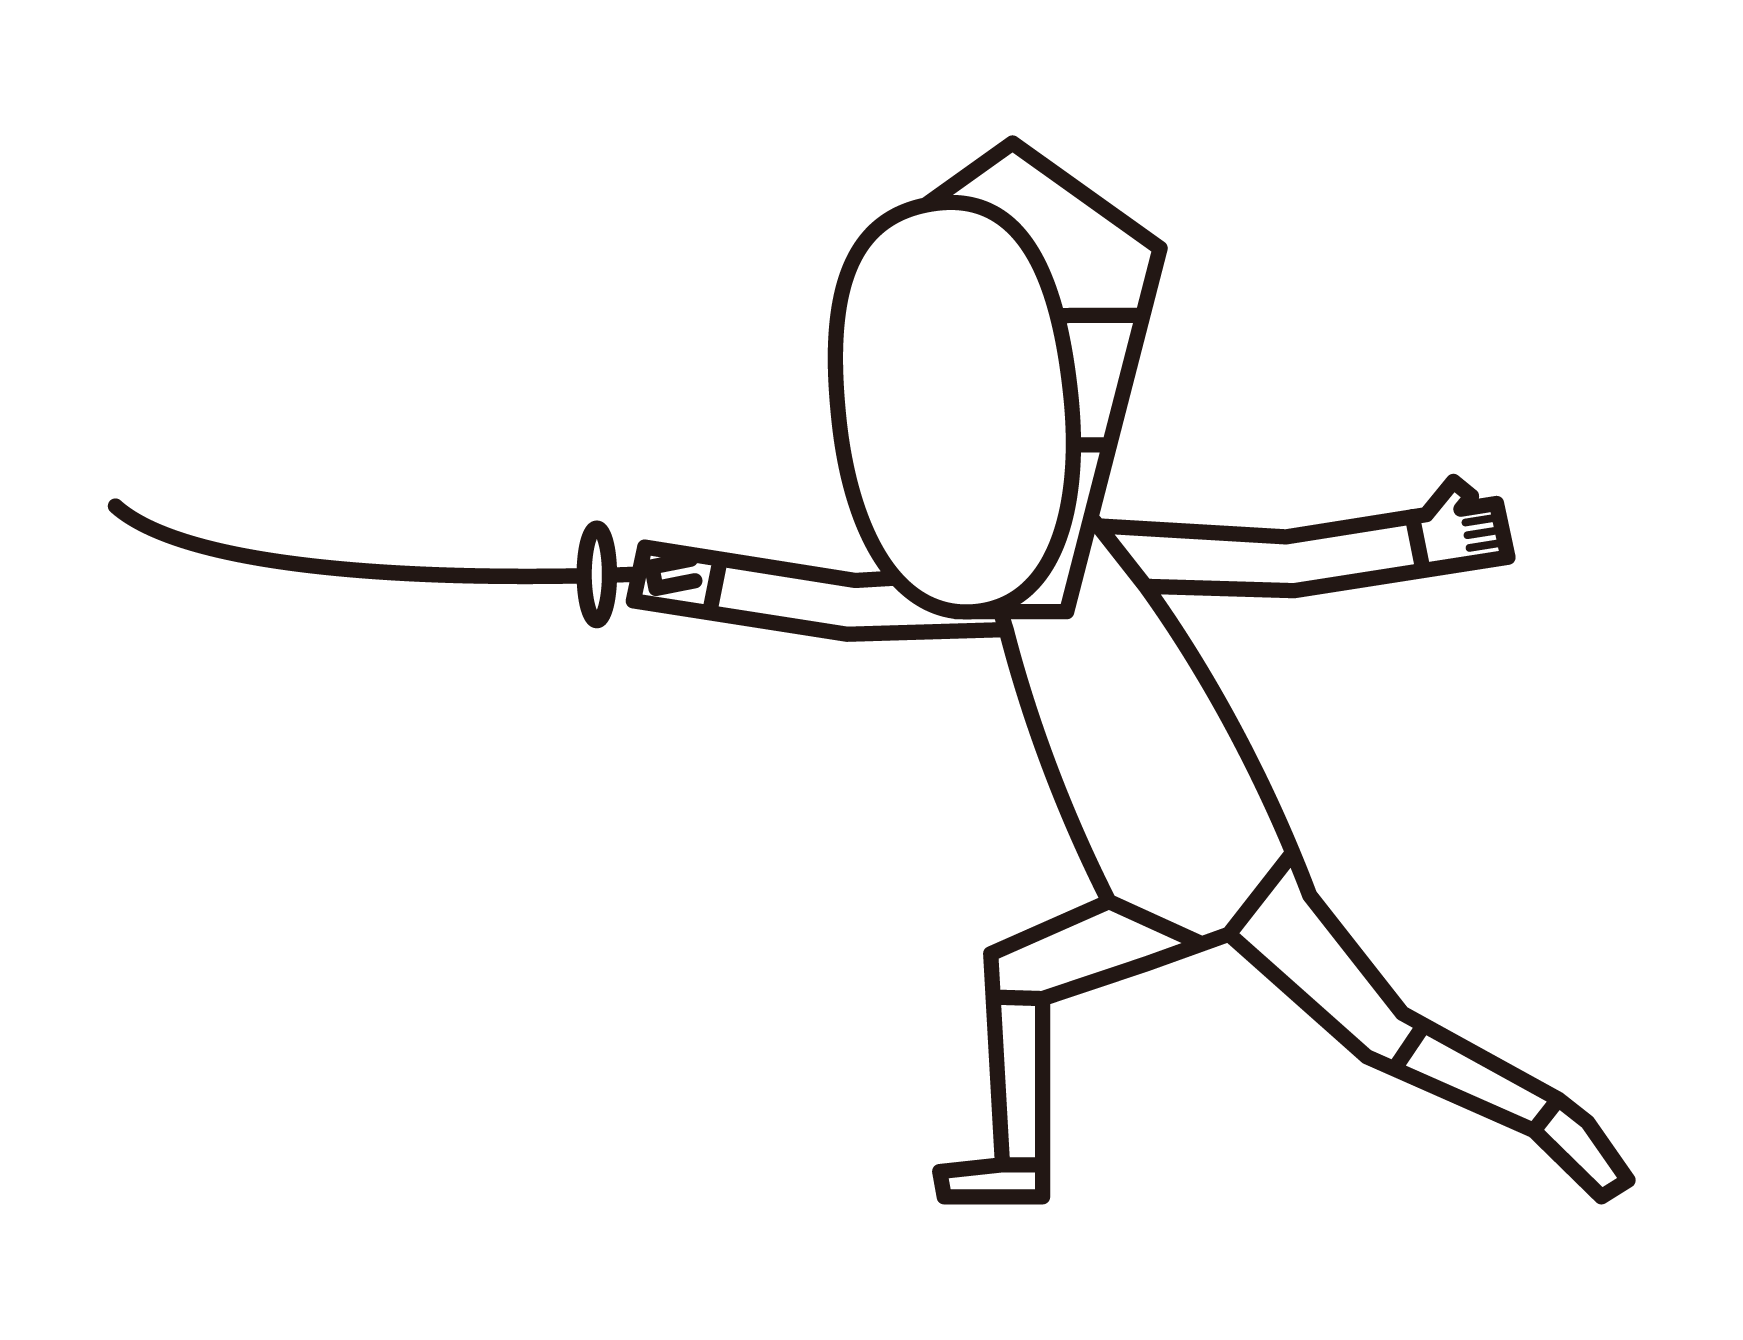 Fencing athlete illustration